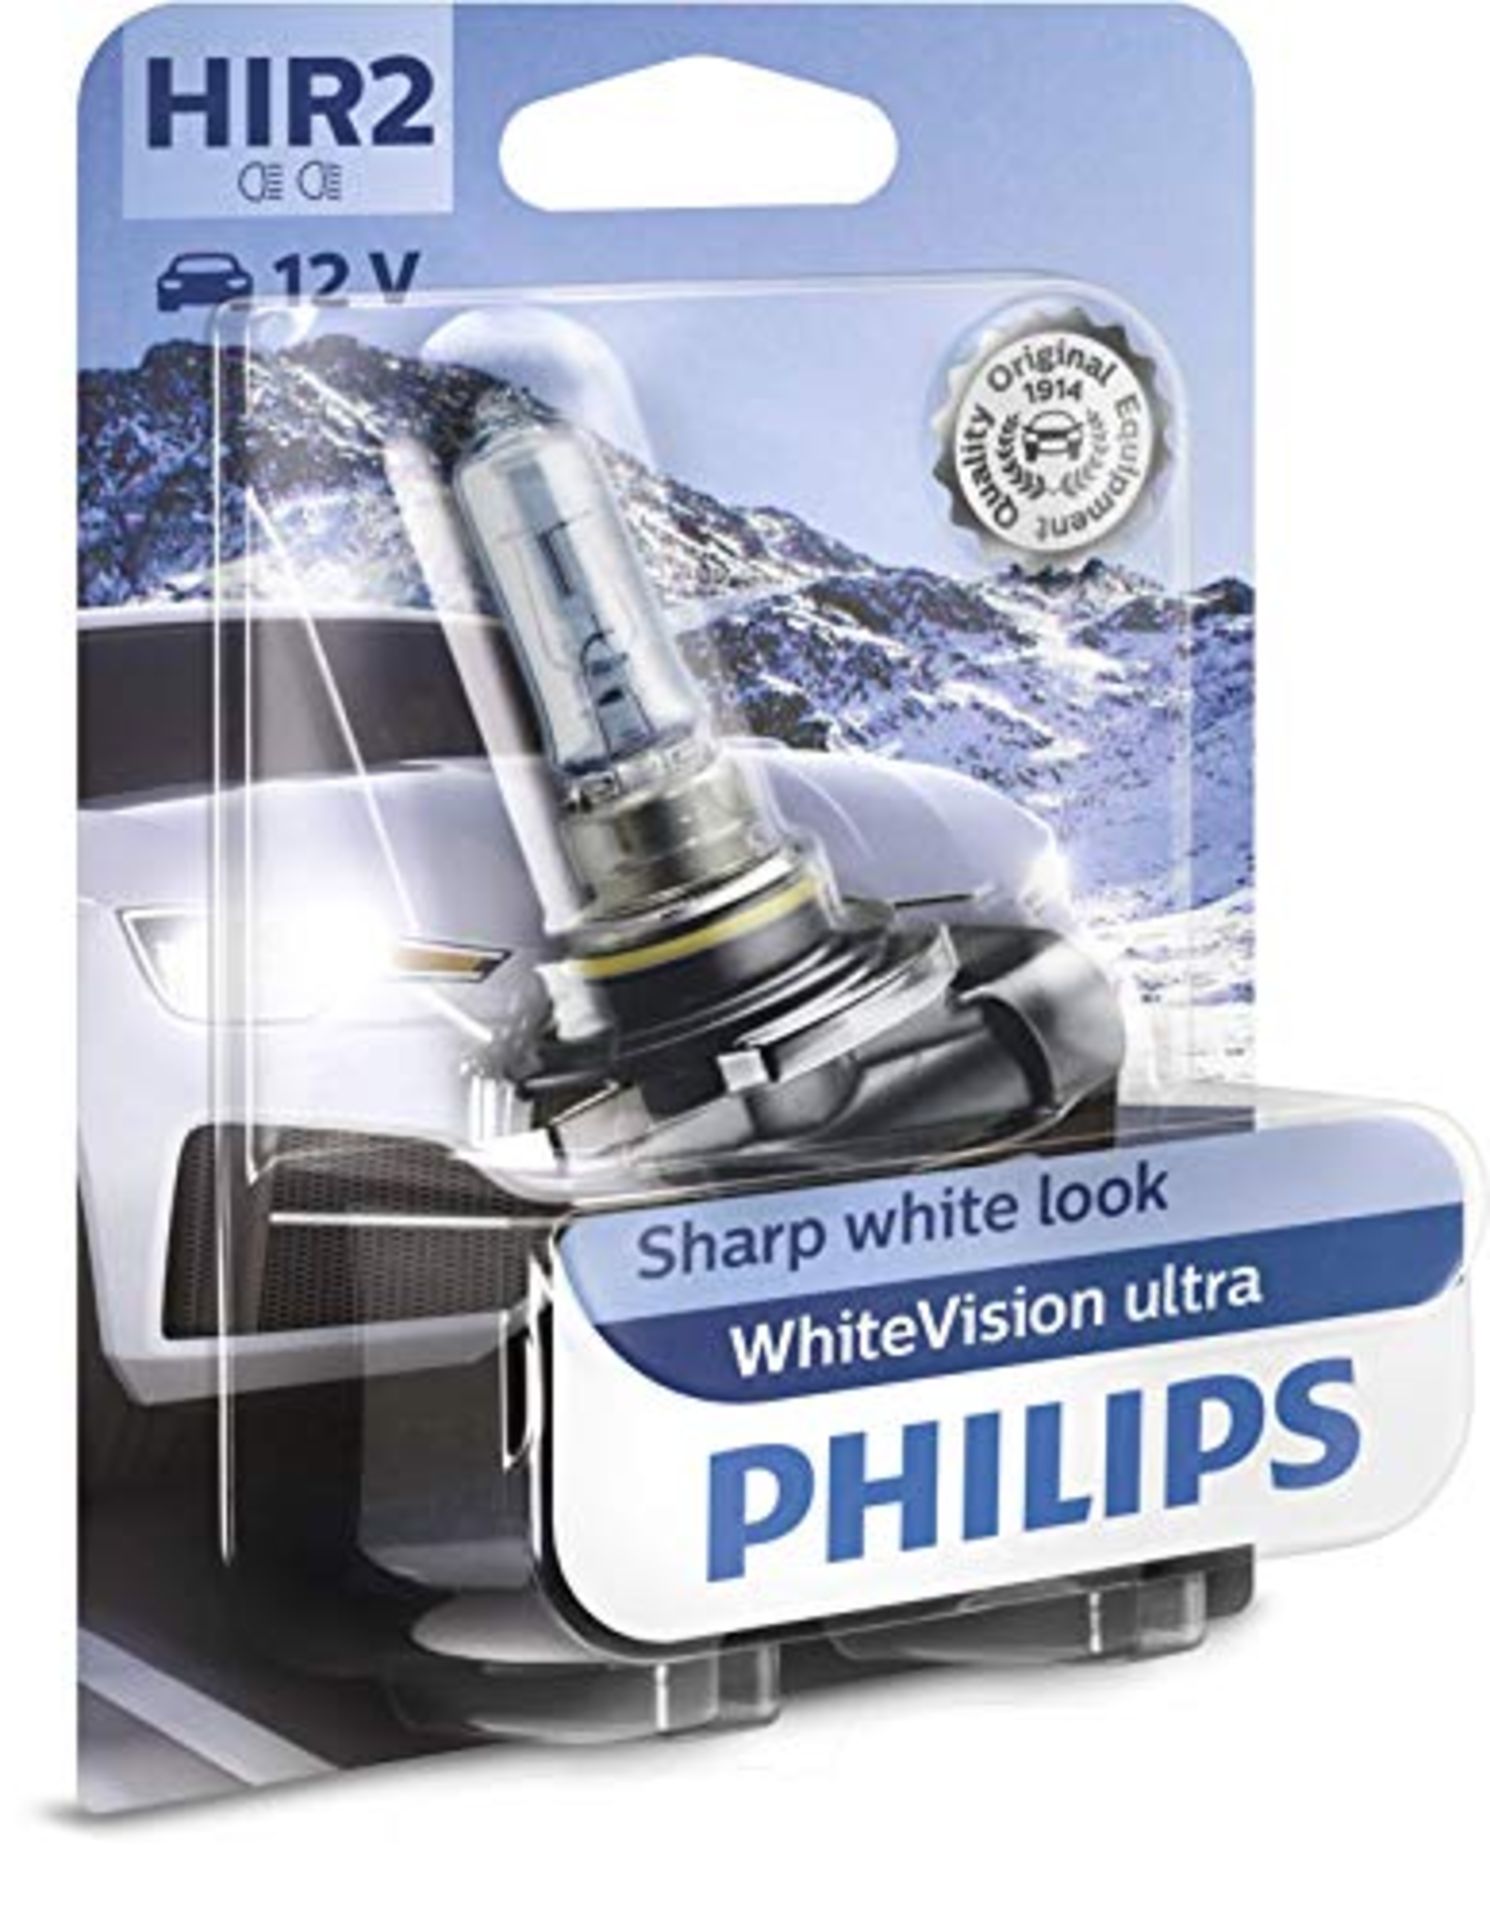 Philips WhiteVision ultra HIR2 car headlight bulb, single blister